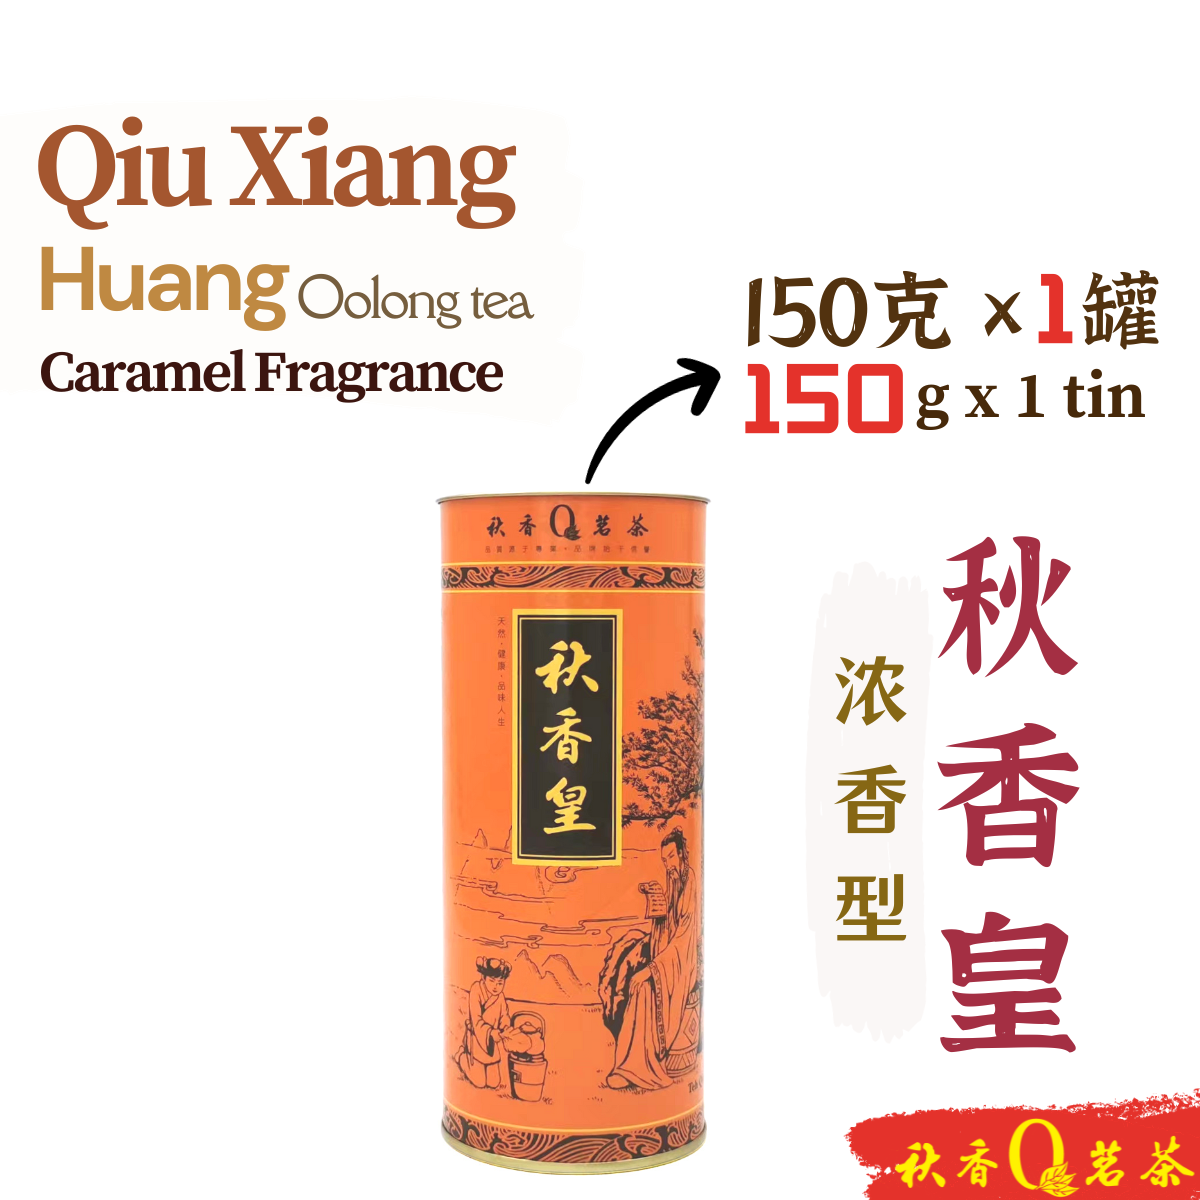 秋香皇 Qiu Xiang Huang tea (浓香 Caramel Fragrance)【150g】|【铁观音 Tie Guan Yin】